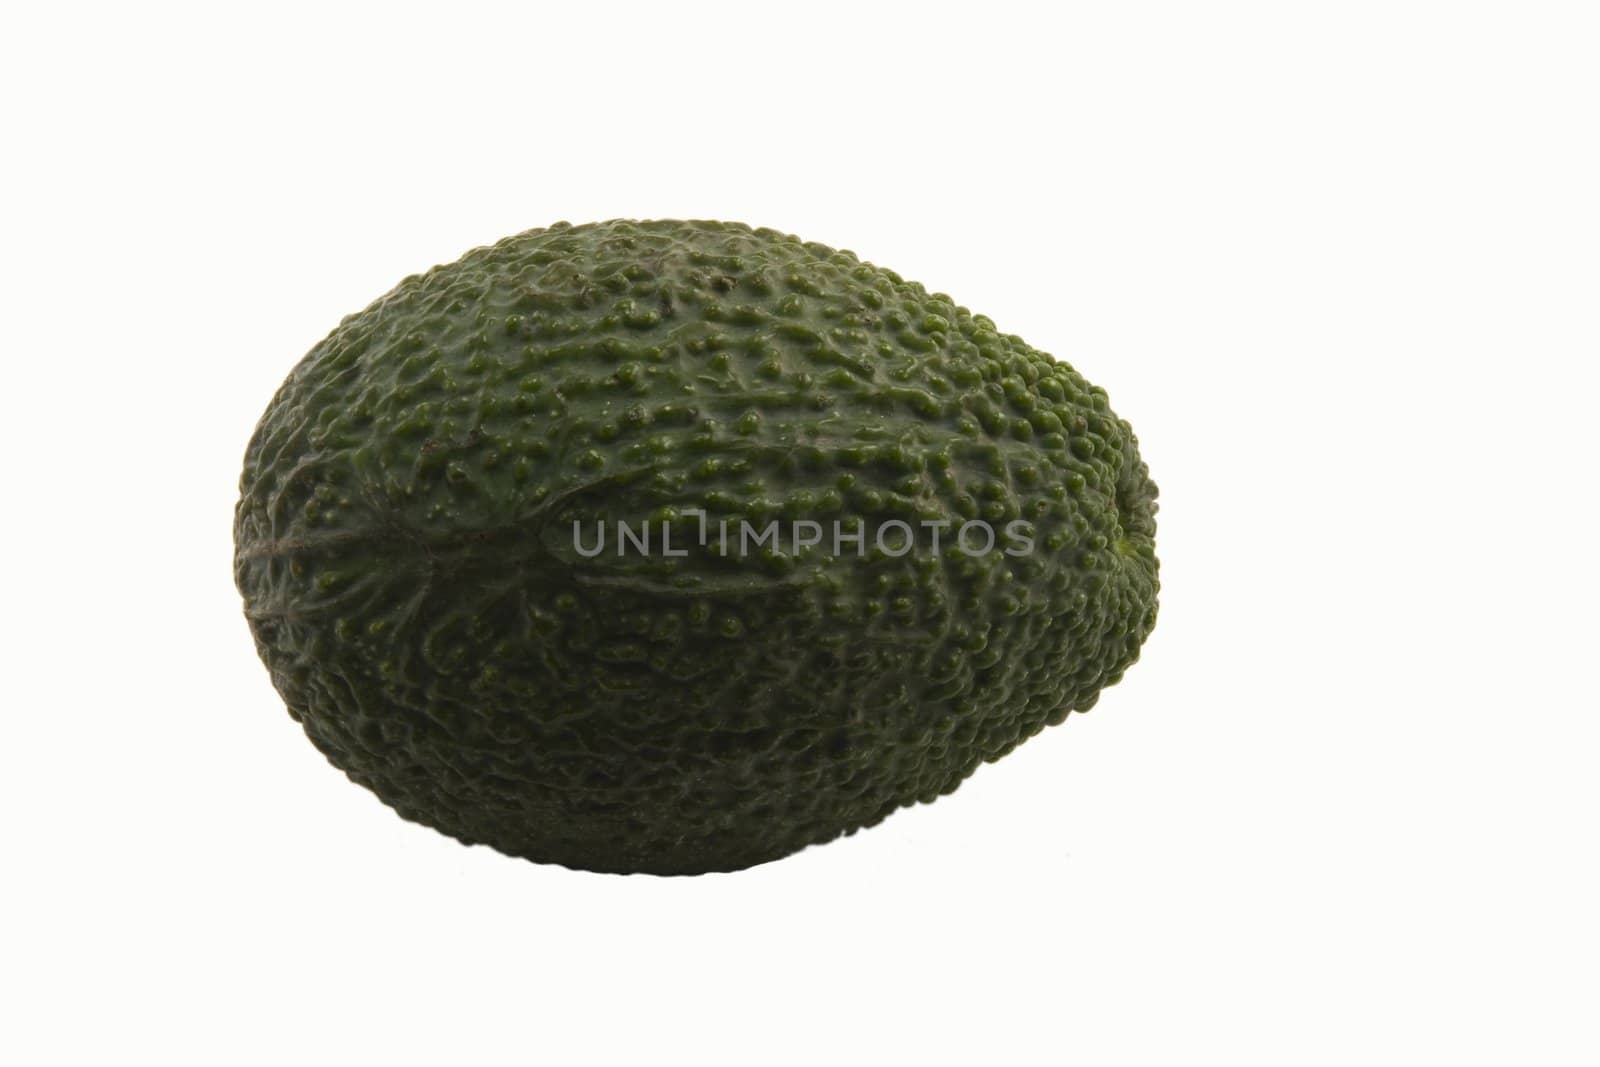 Avocado by Vladimir